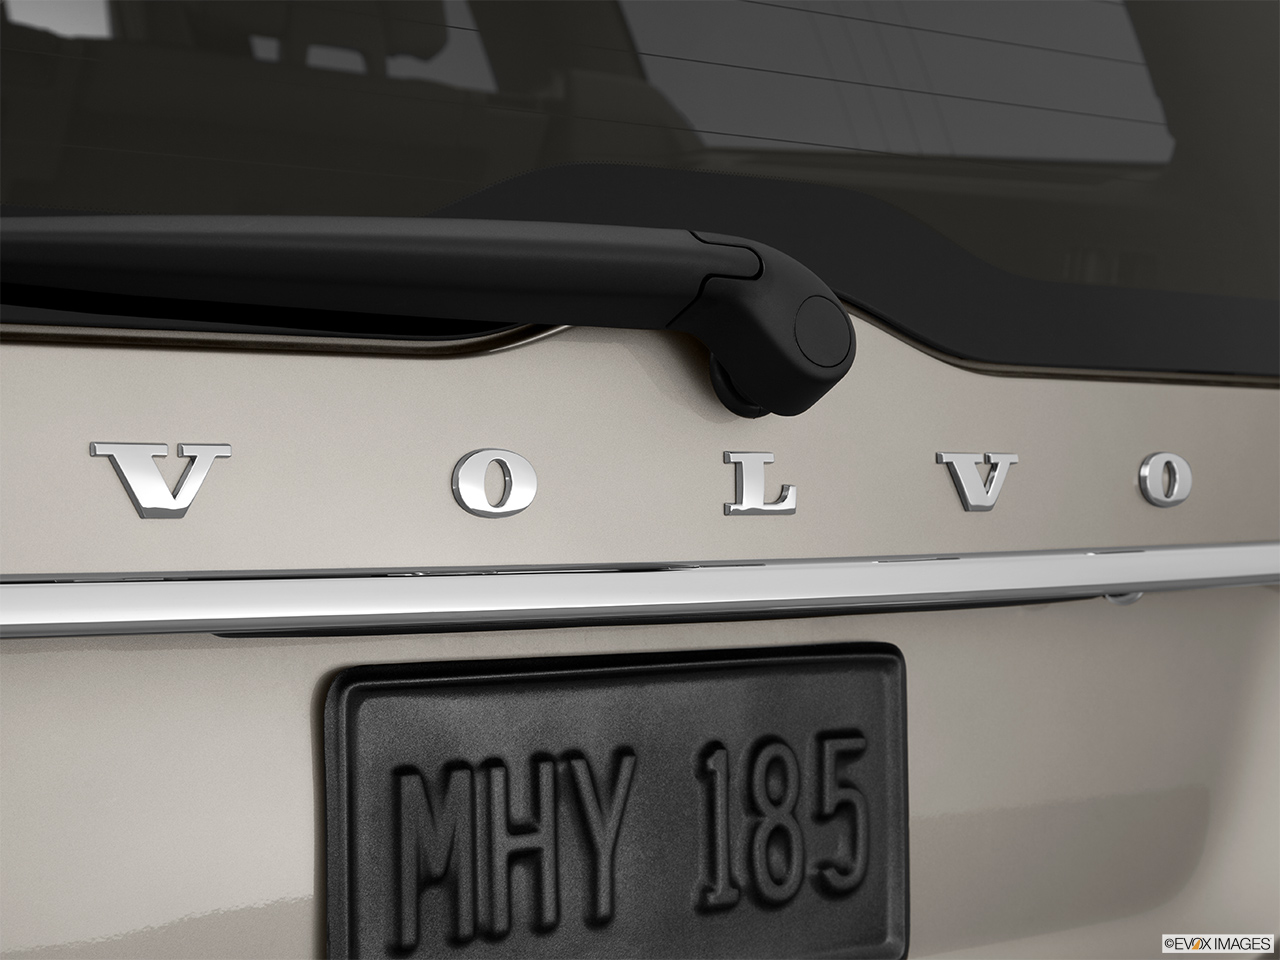 2014 Volvo XC70 3.2 AWD Premier Plus Exterior Bonus Shots (no set spec) 